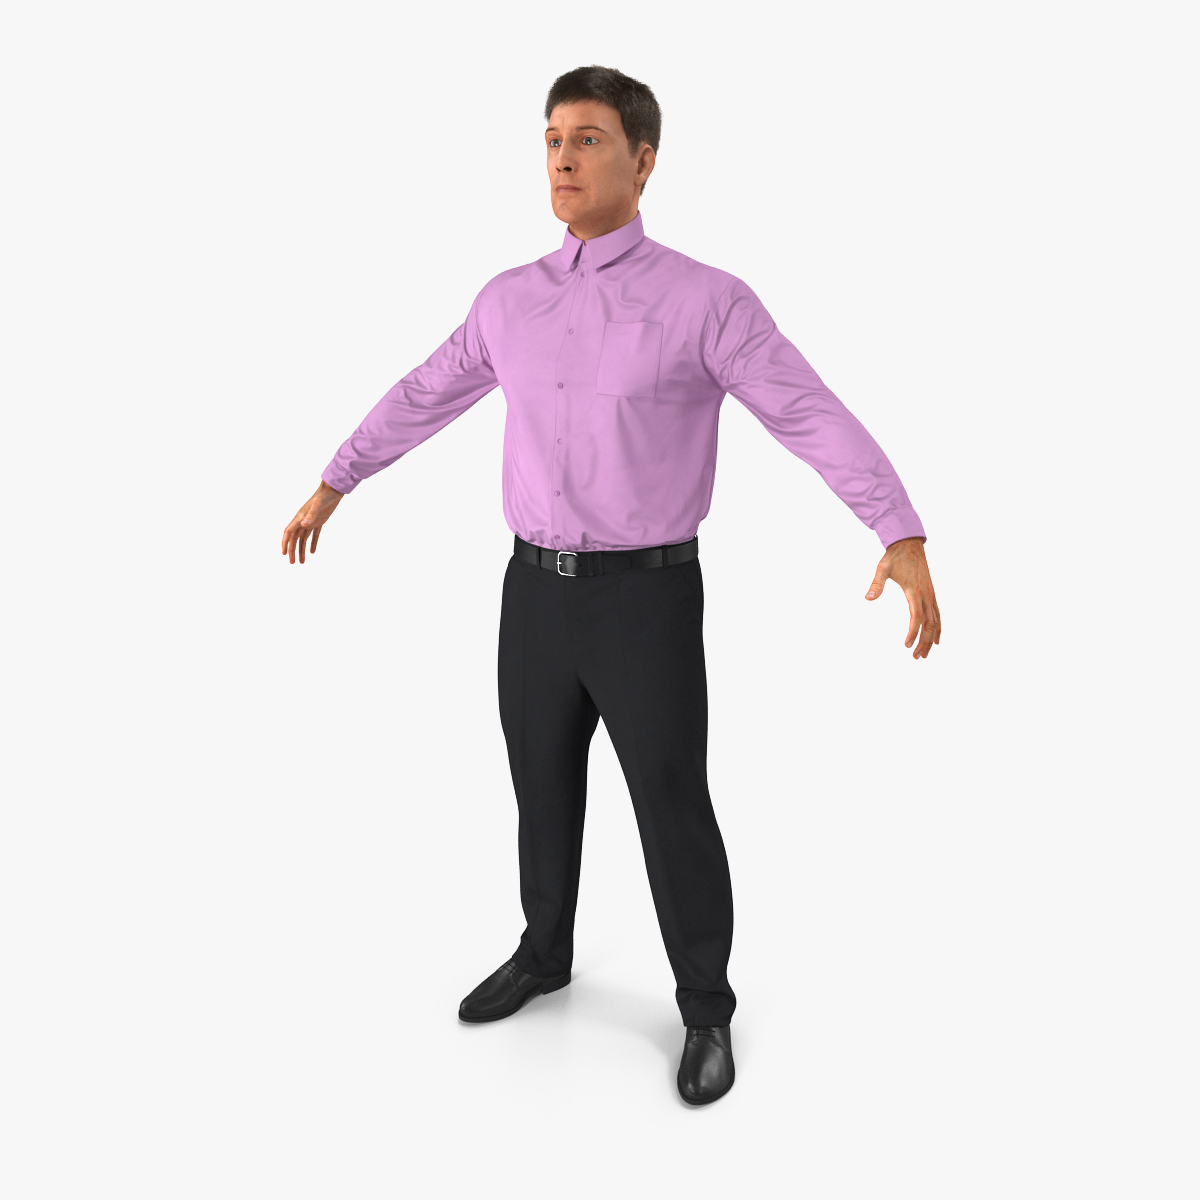 Men business casual dress 3D model - TurboSquid 1158130